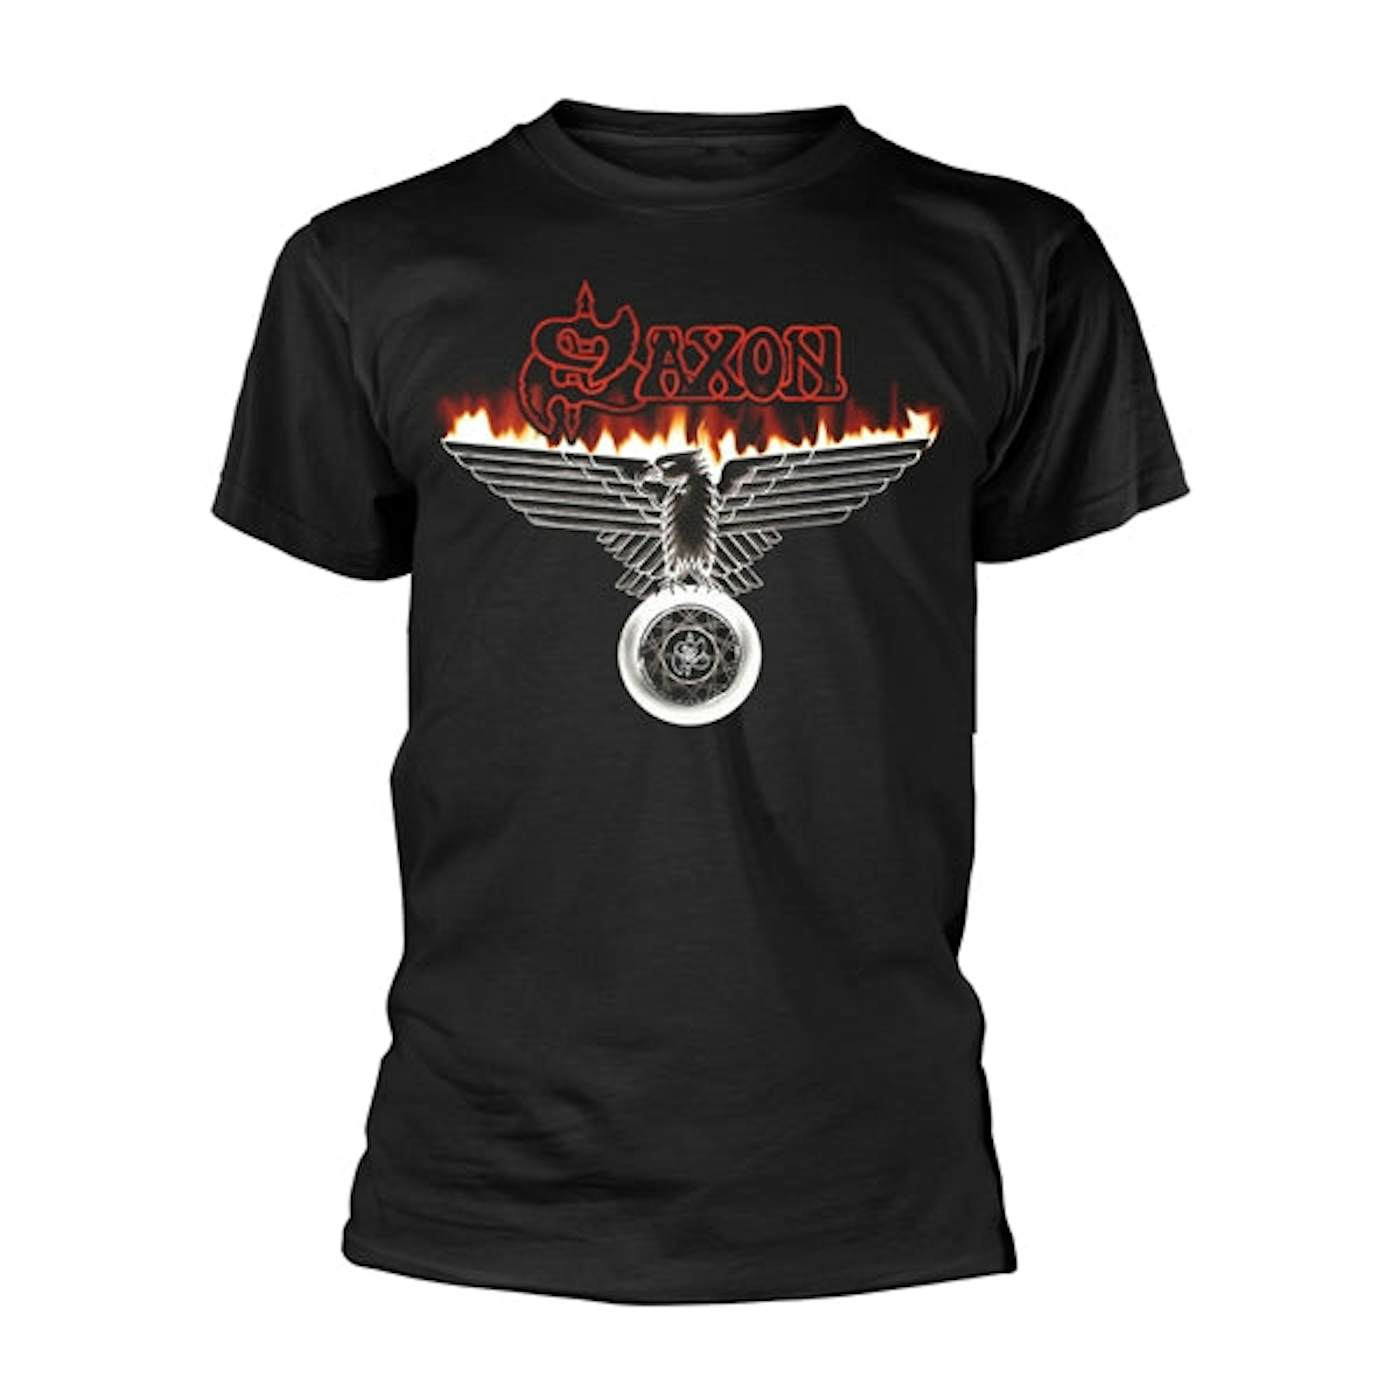 Saxon T-Shirt - Wheels Of Steel